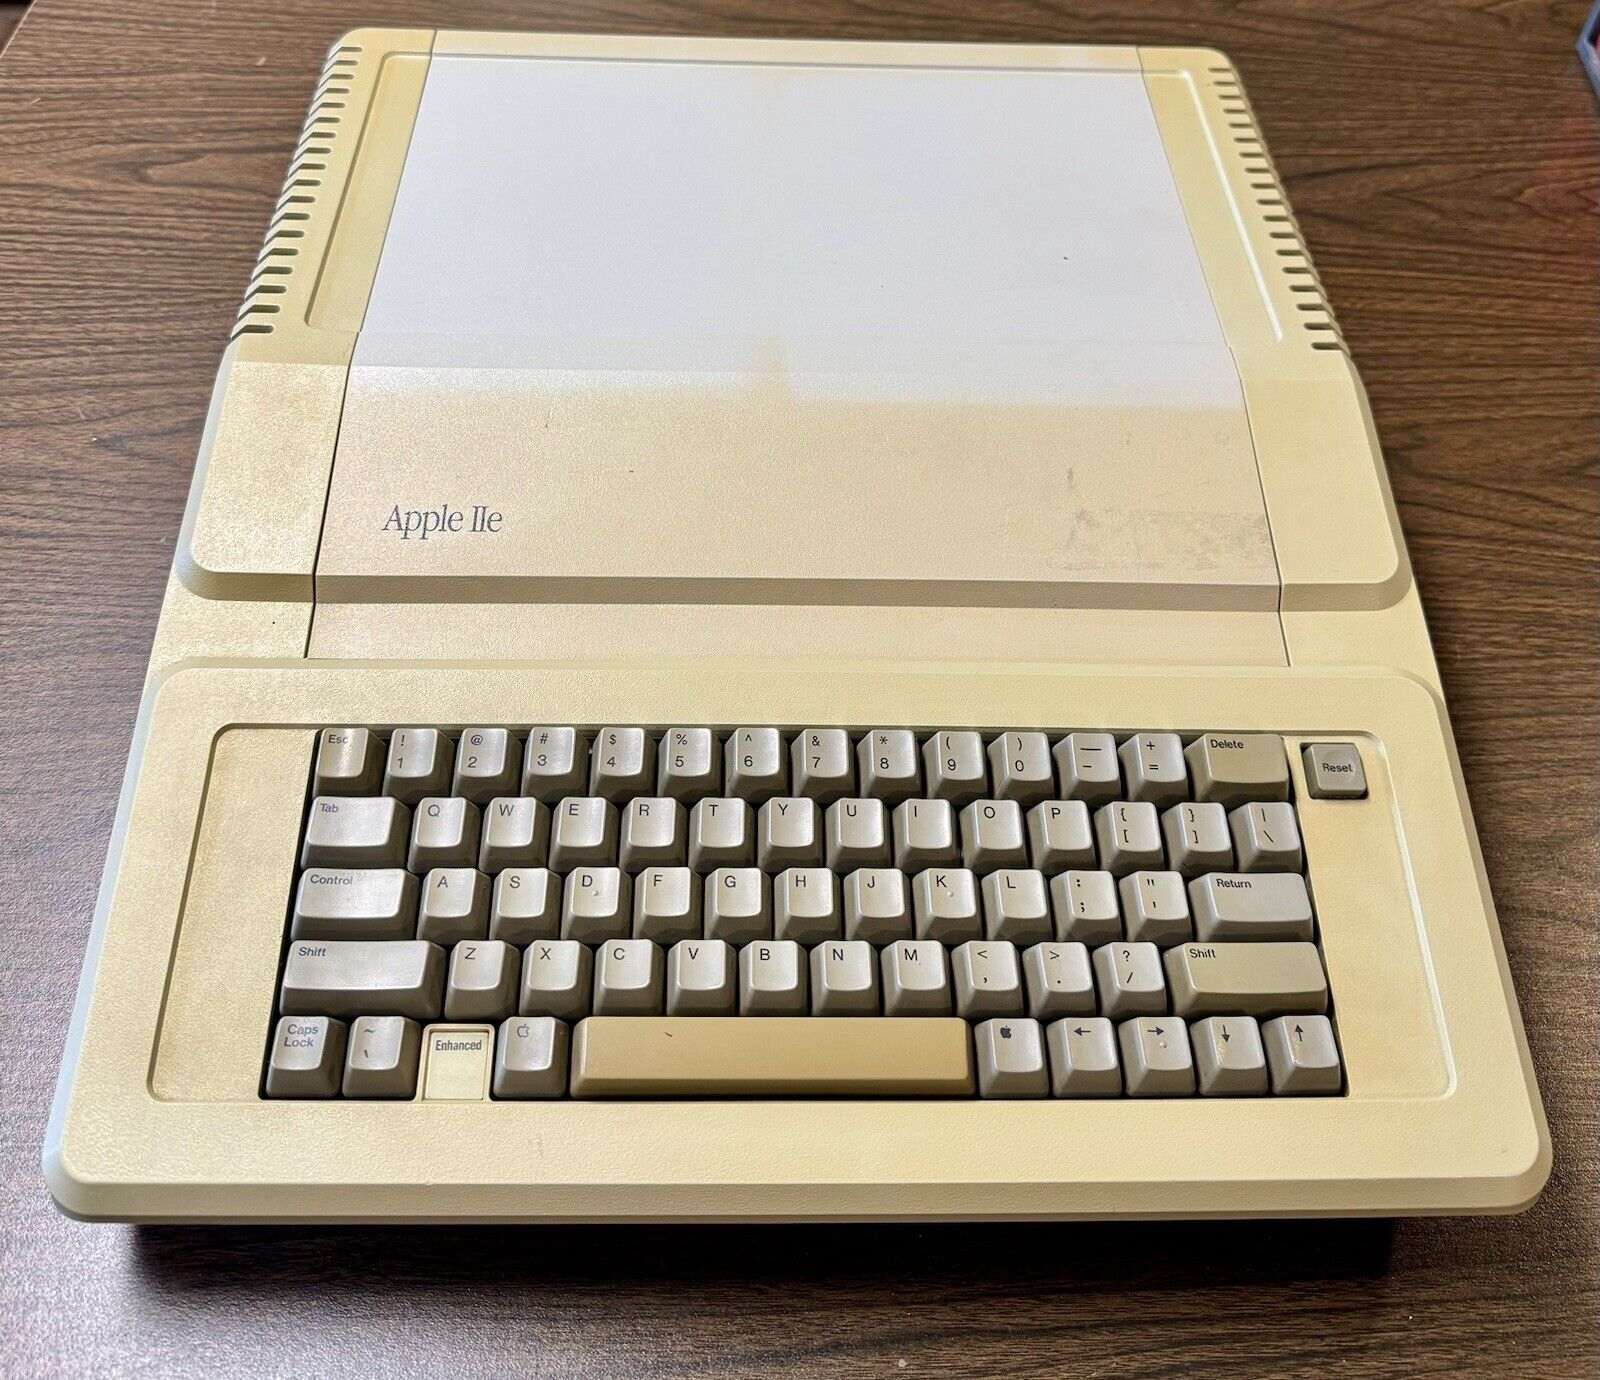 Apple IIe A2S2064 Vintage Personal Computer 128K Enhanced